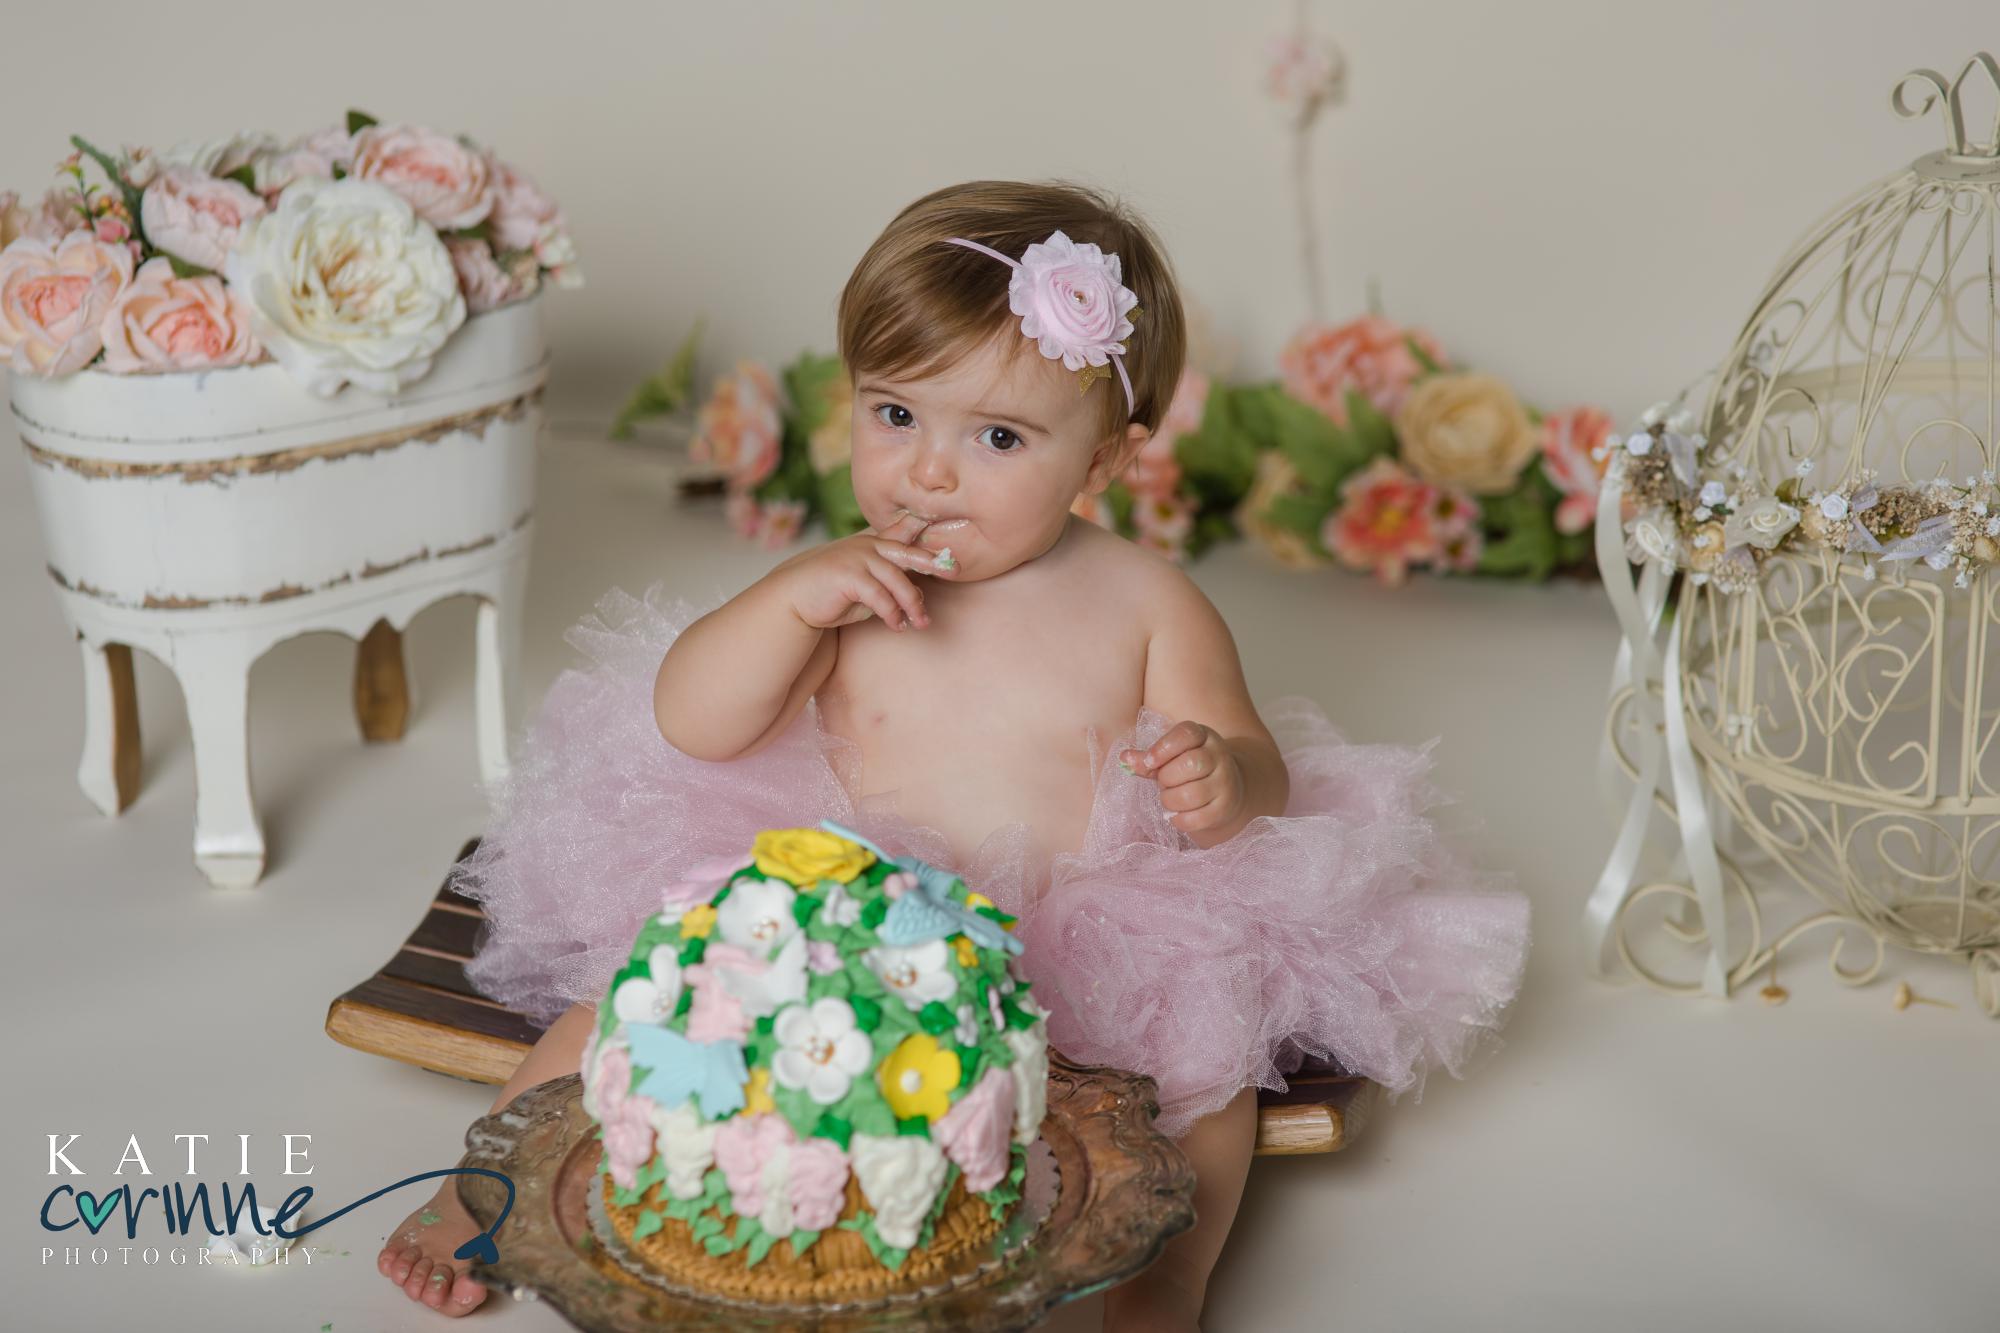 Baby tasting cake at cake smash session